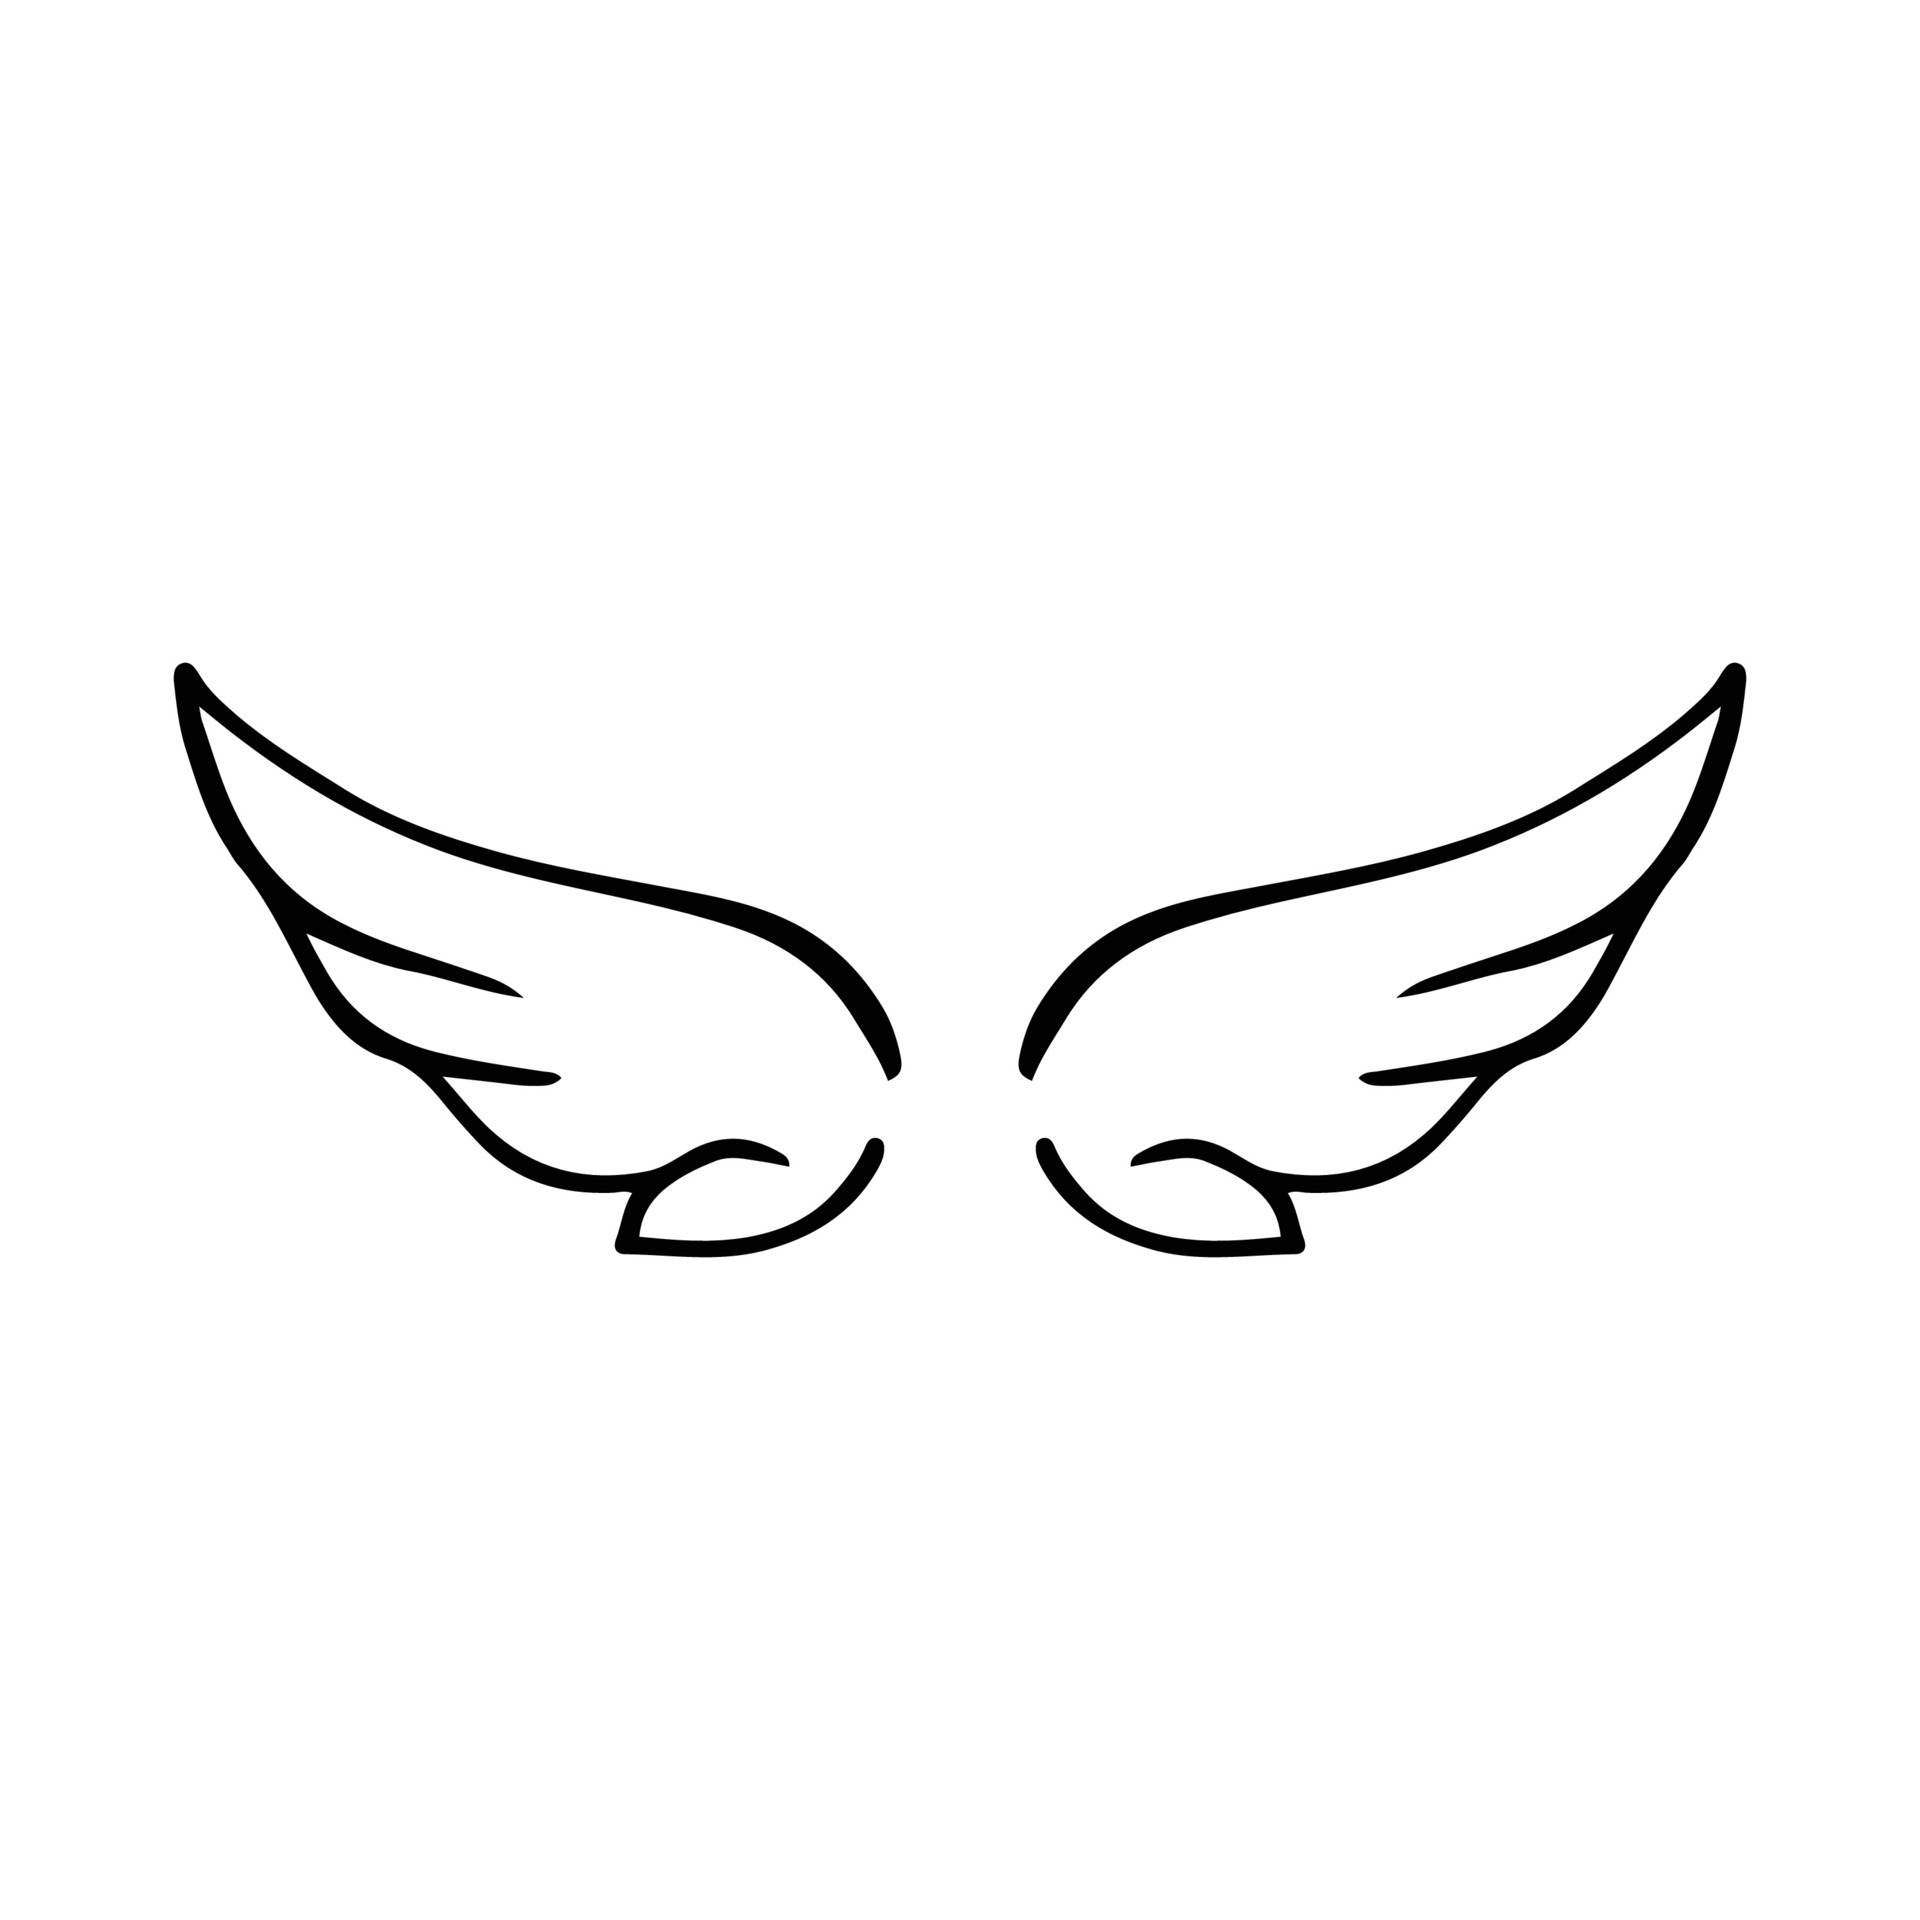 Doodle wings. Cartoon bird feather wings, religious angel wings ink ...